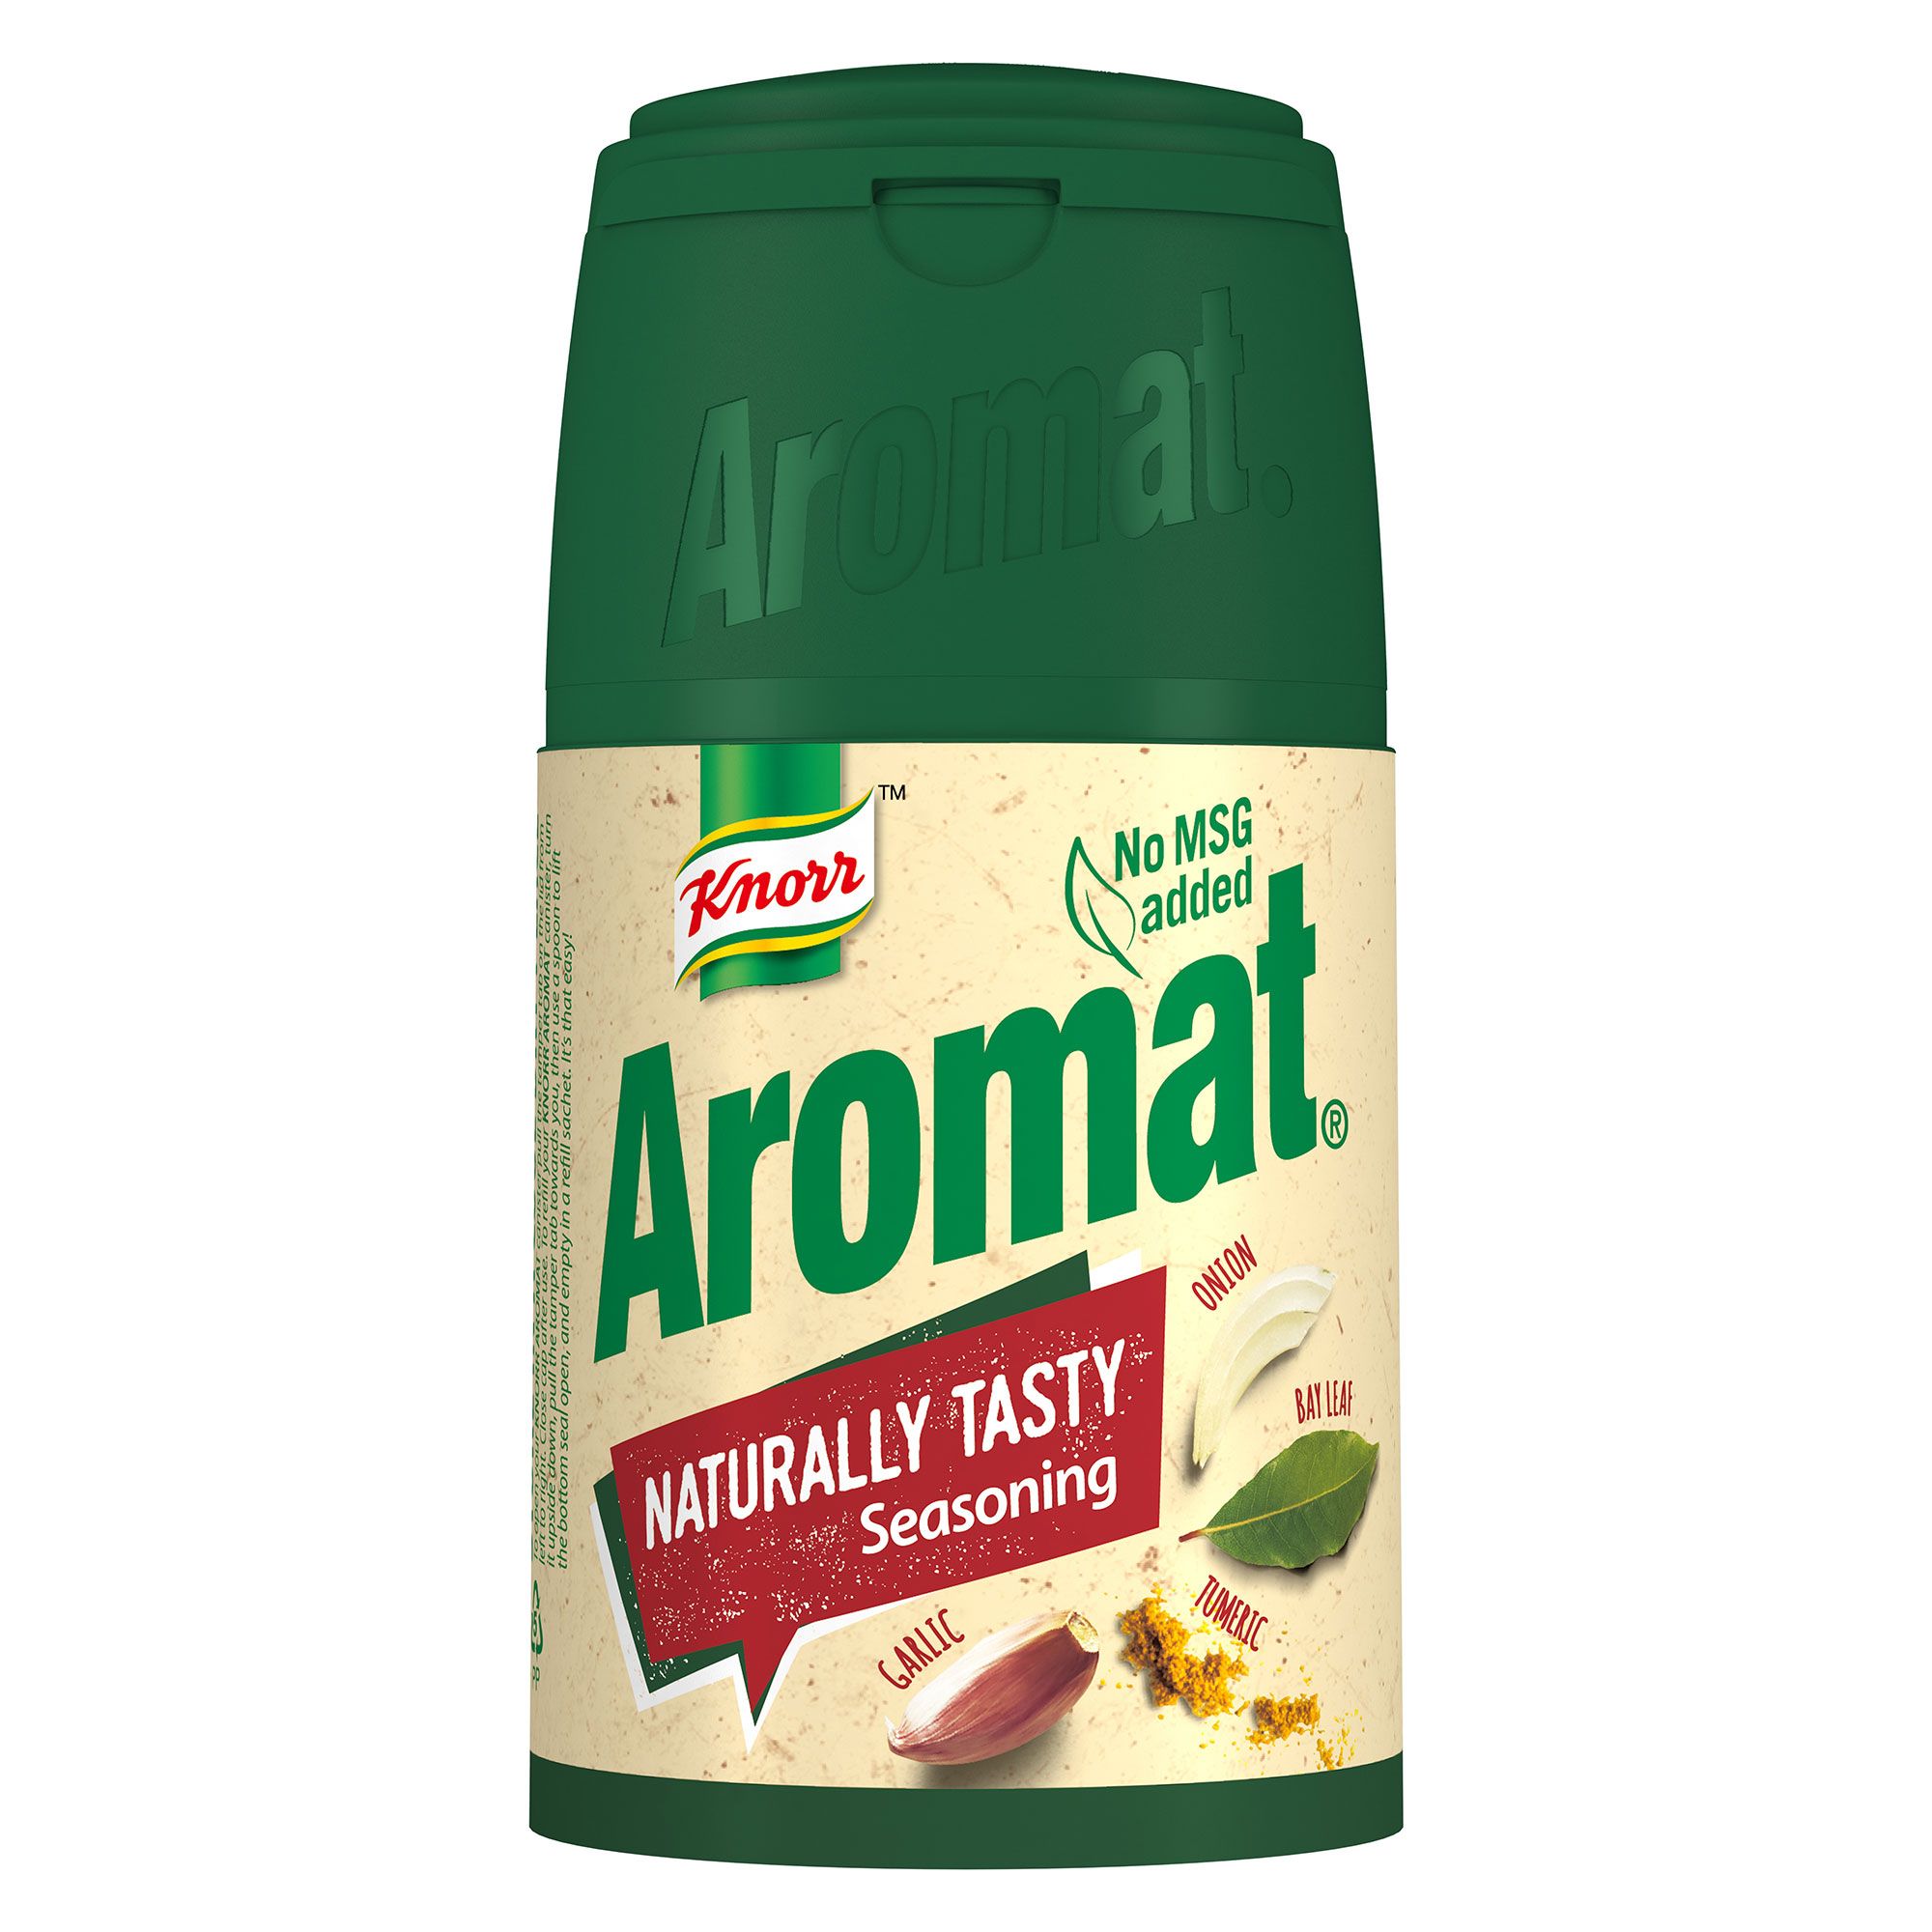 Knorr Aromat Naturally Tasty Seasoning